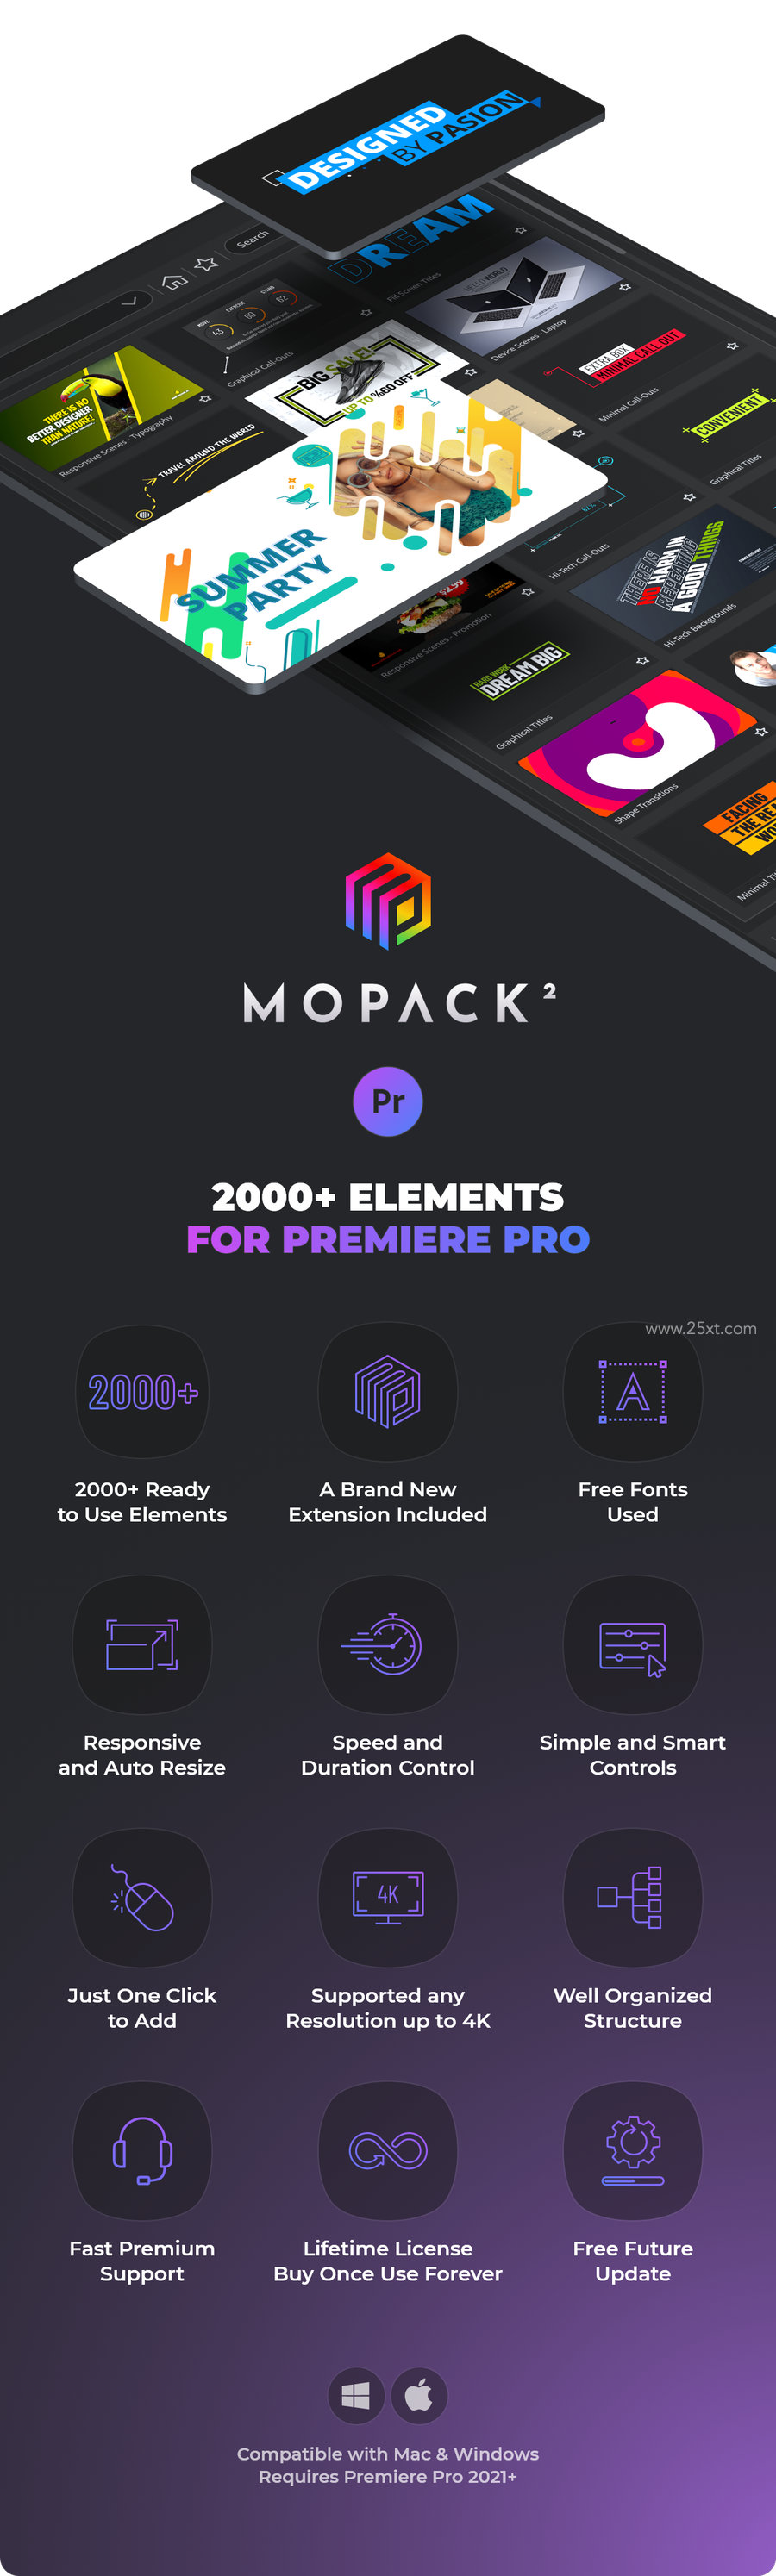 25xt-174302-MoPack - Motion Graphics Pack for Premiere Pro2.jpg